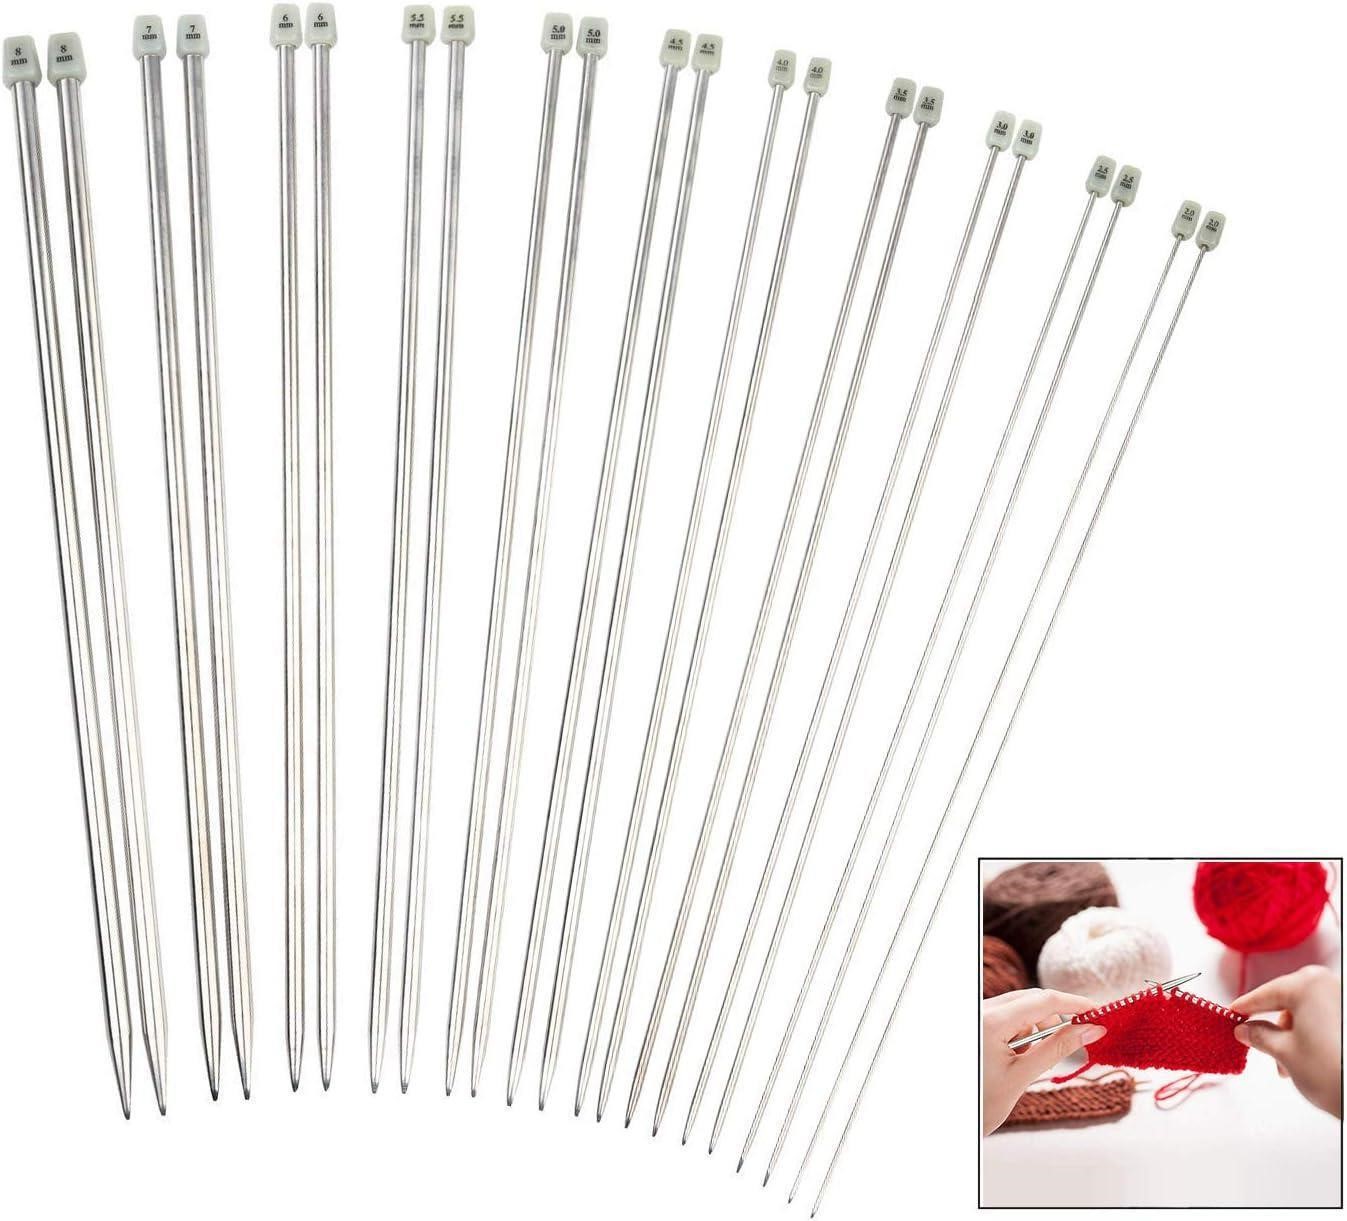 NEW-Xrten 11-Set Steel Knitting Needles x5